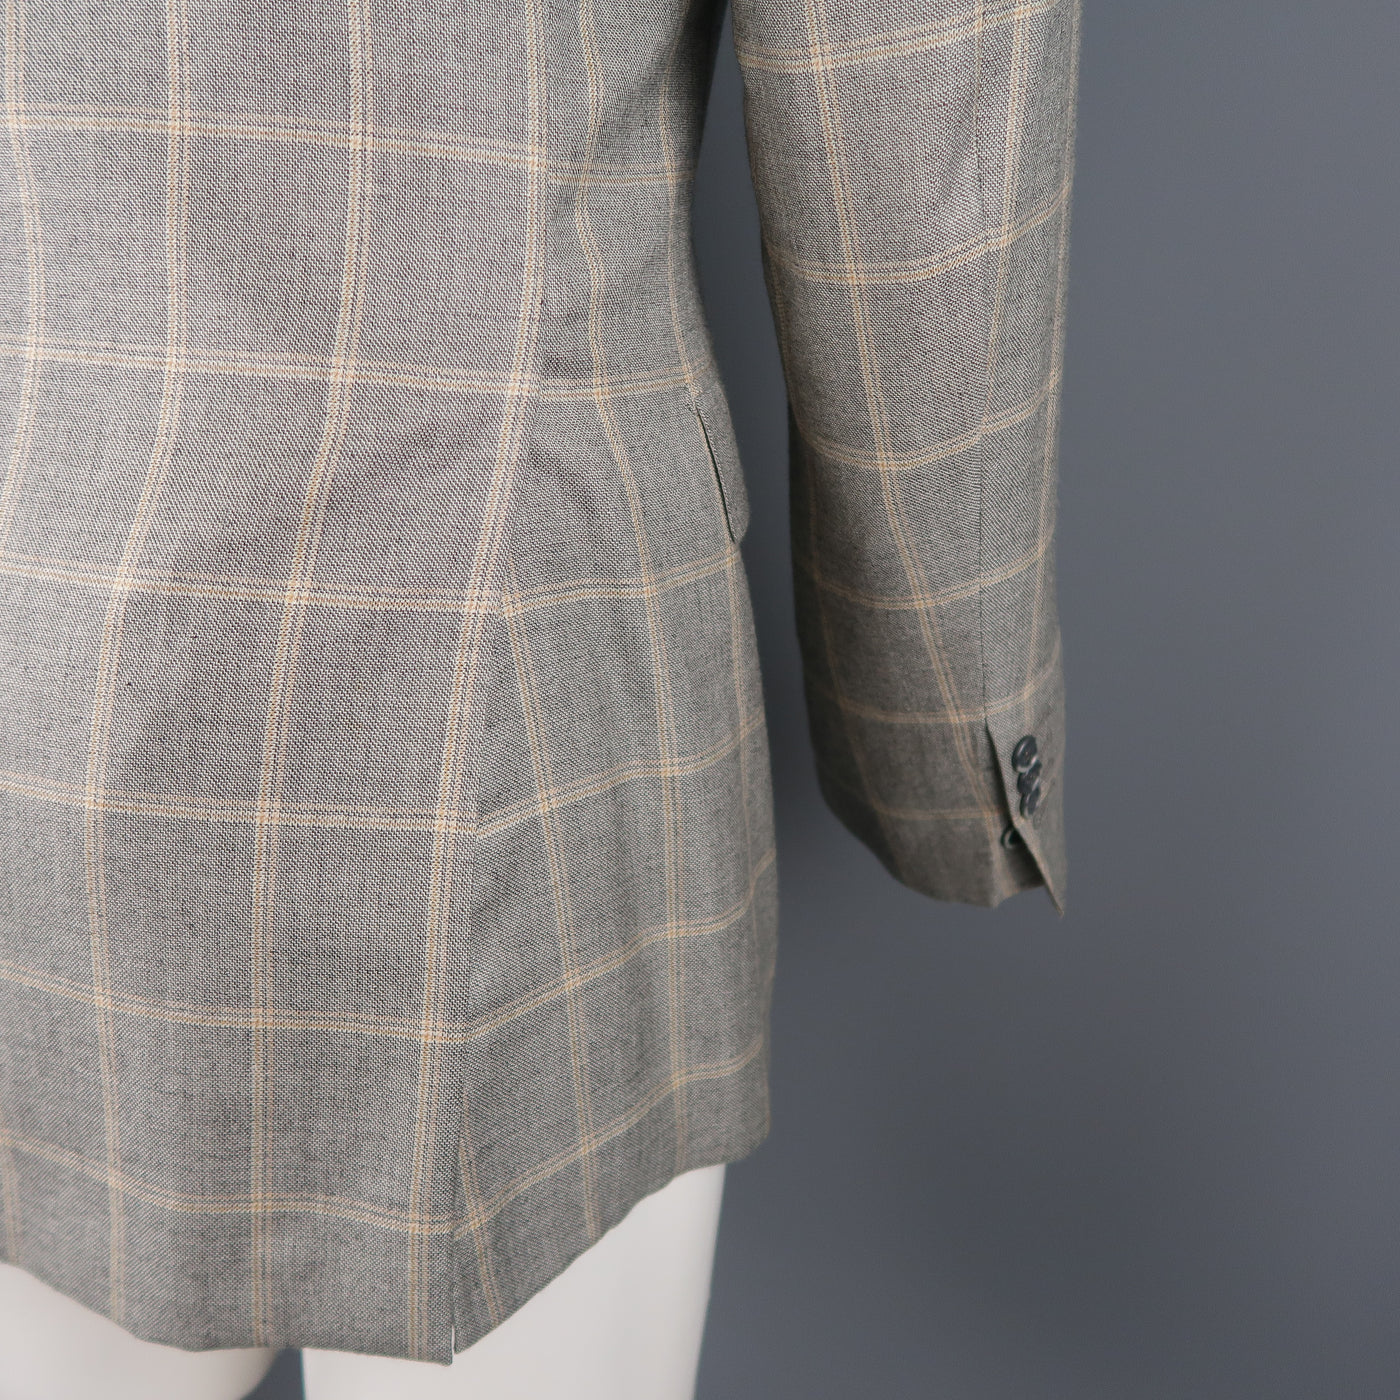 BRIONI US 40 / IT 50 Gray Window Pane Wool & Silk Blazer / Sport Coat